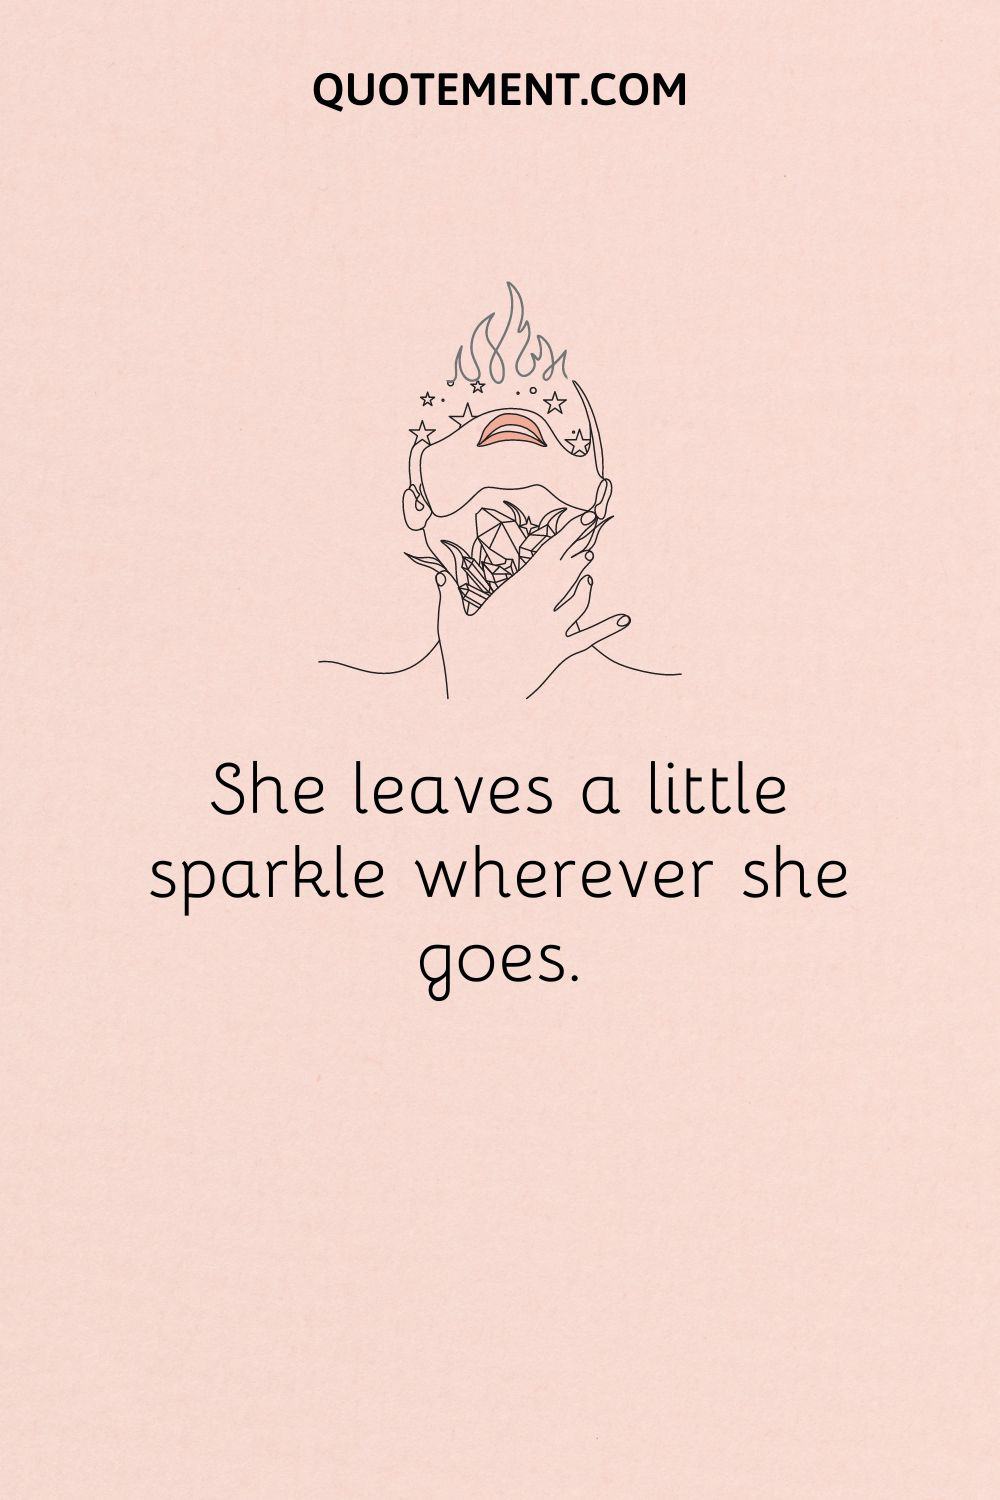 She leaves a little sparkle wherever she goes